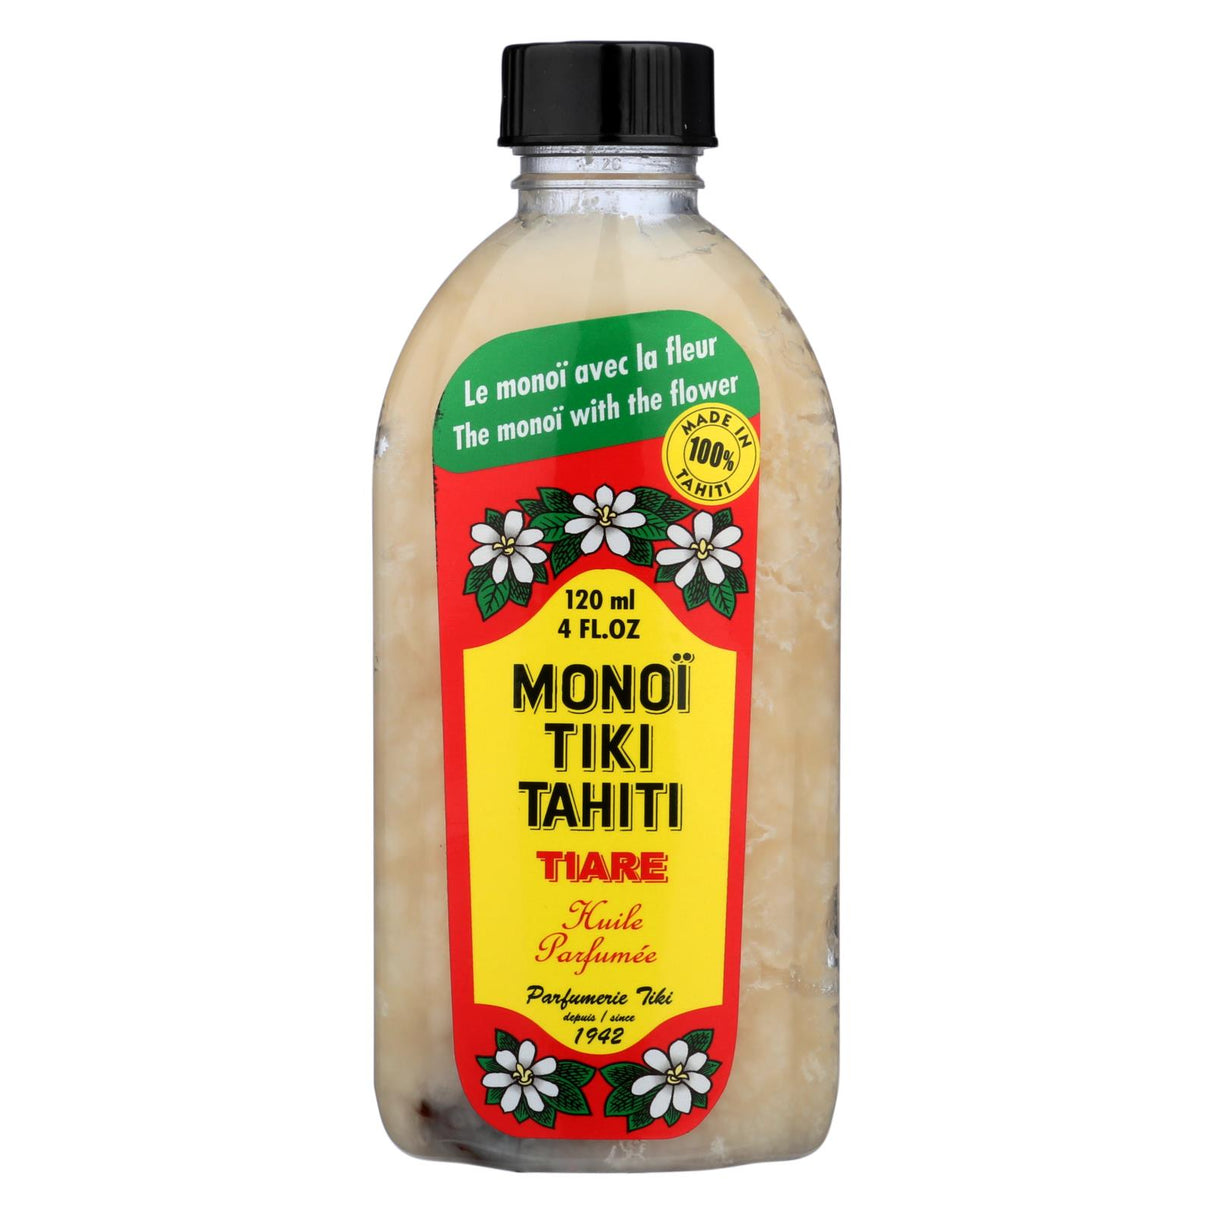 Monoi Tiare Tahiti | Pure Coconut Oil with Tiare Flowers (4 fl oz) | Skin, Hair, Massage - Cozy Farm 